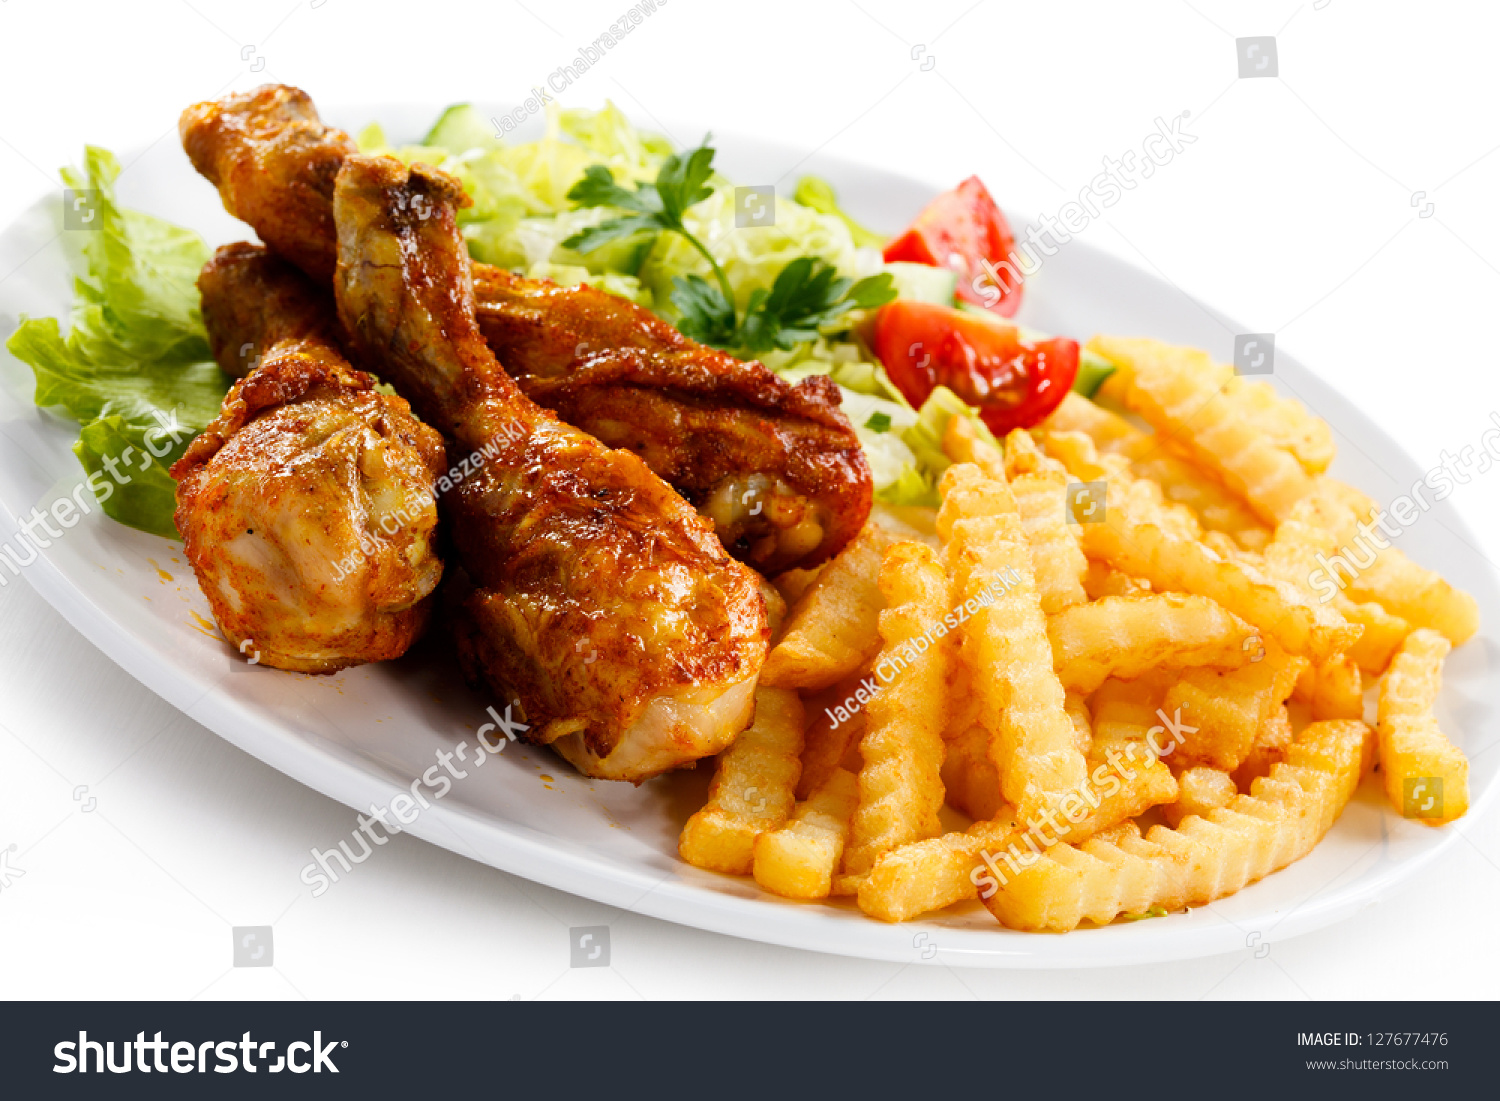 Grilled Chicken Legs Chips Vegetables Stock Photo 127677476 - Shutterstock